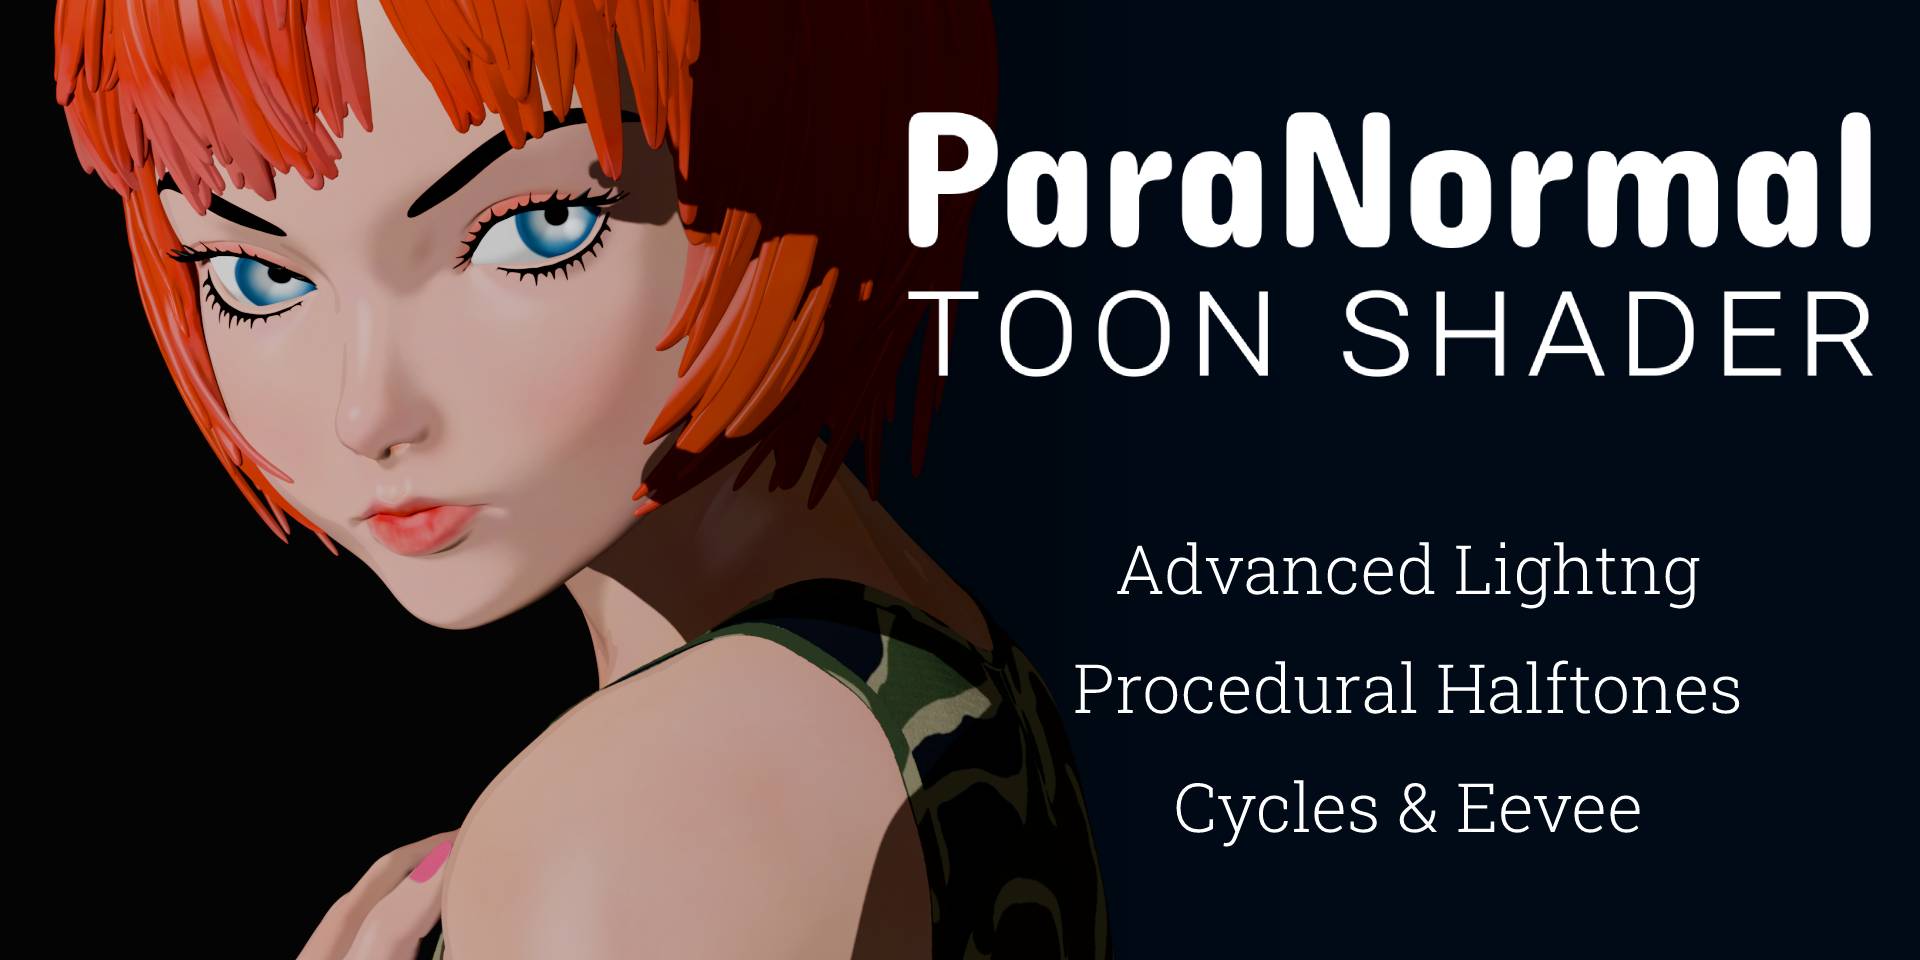 ParaNormal Toon Shader - Advanced Lighting, Procedural Halftones, Cycles & Eevee